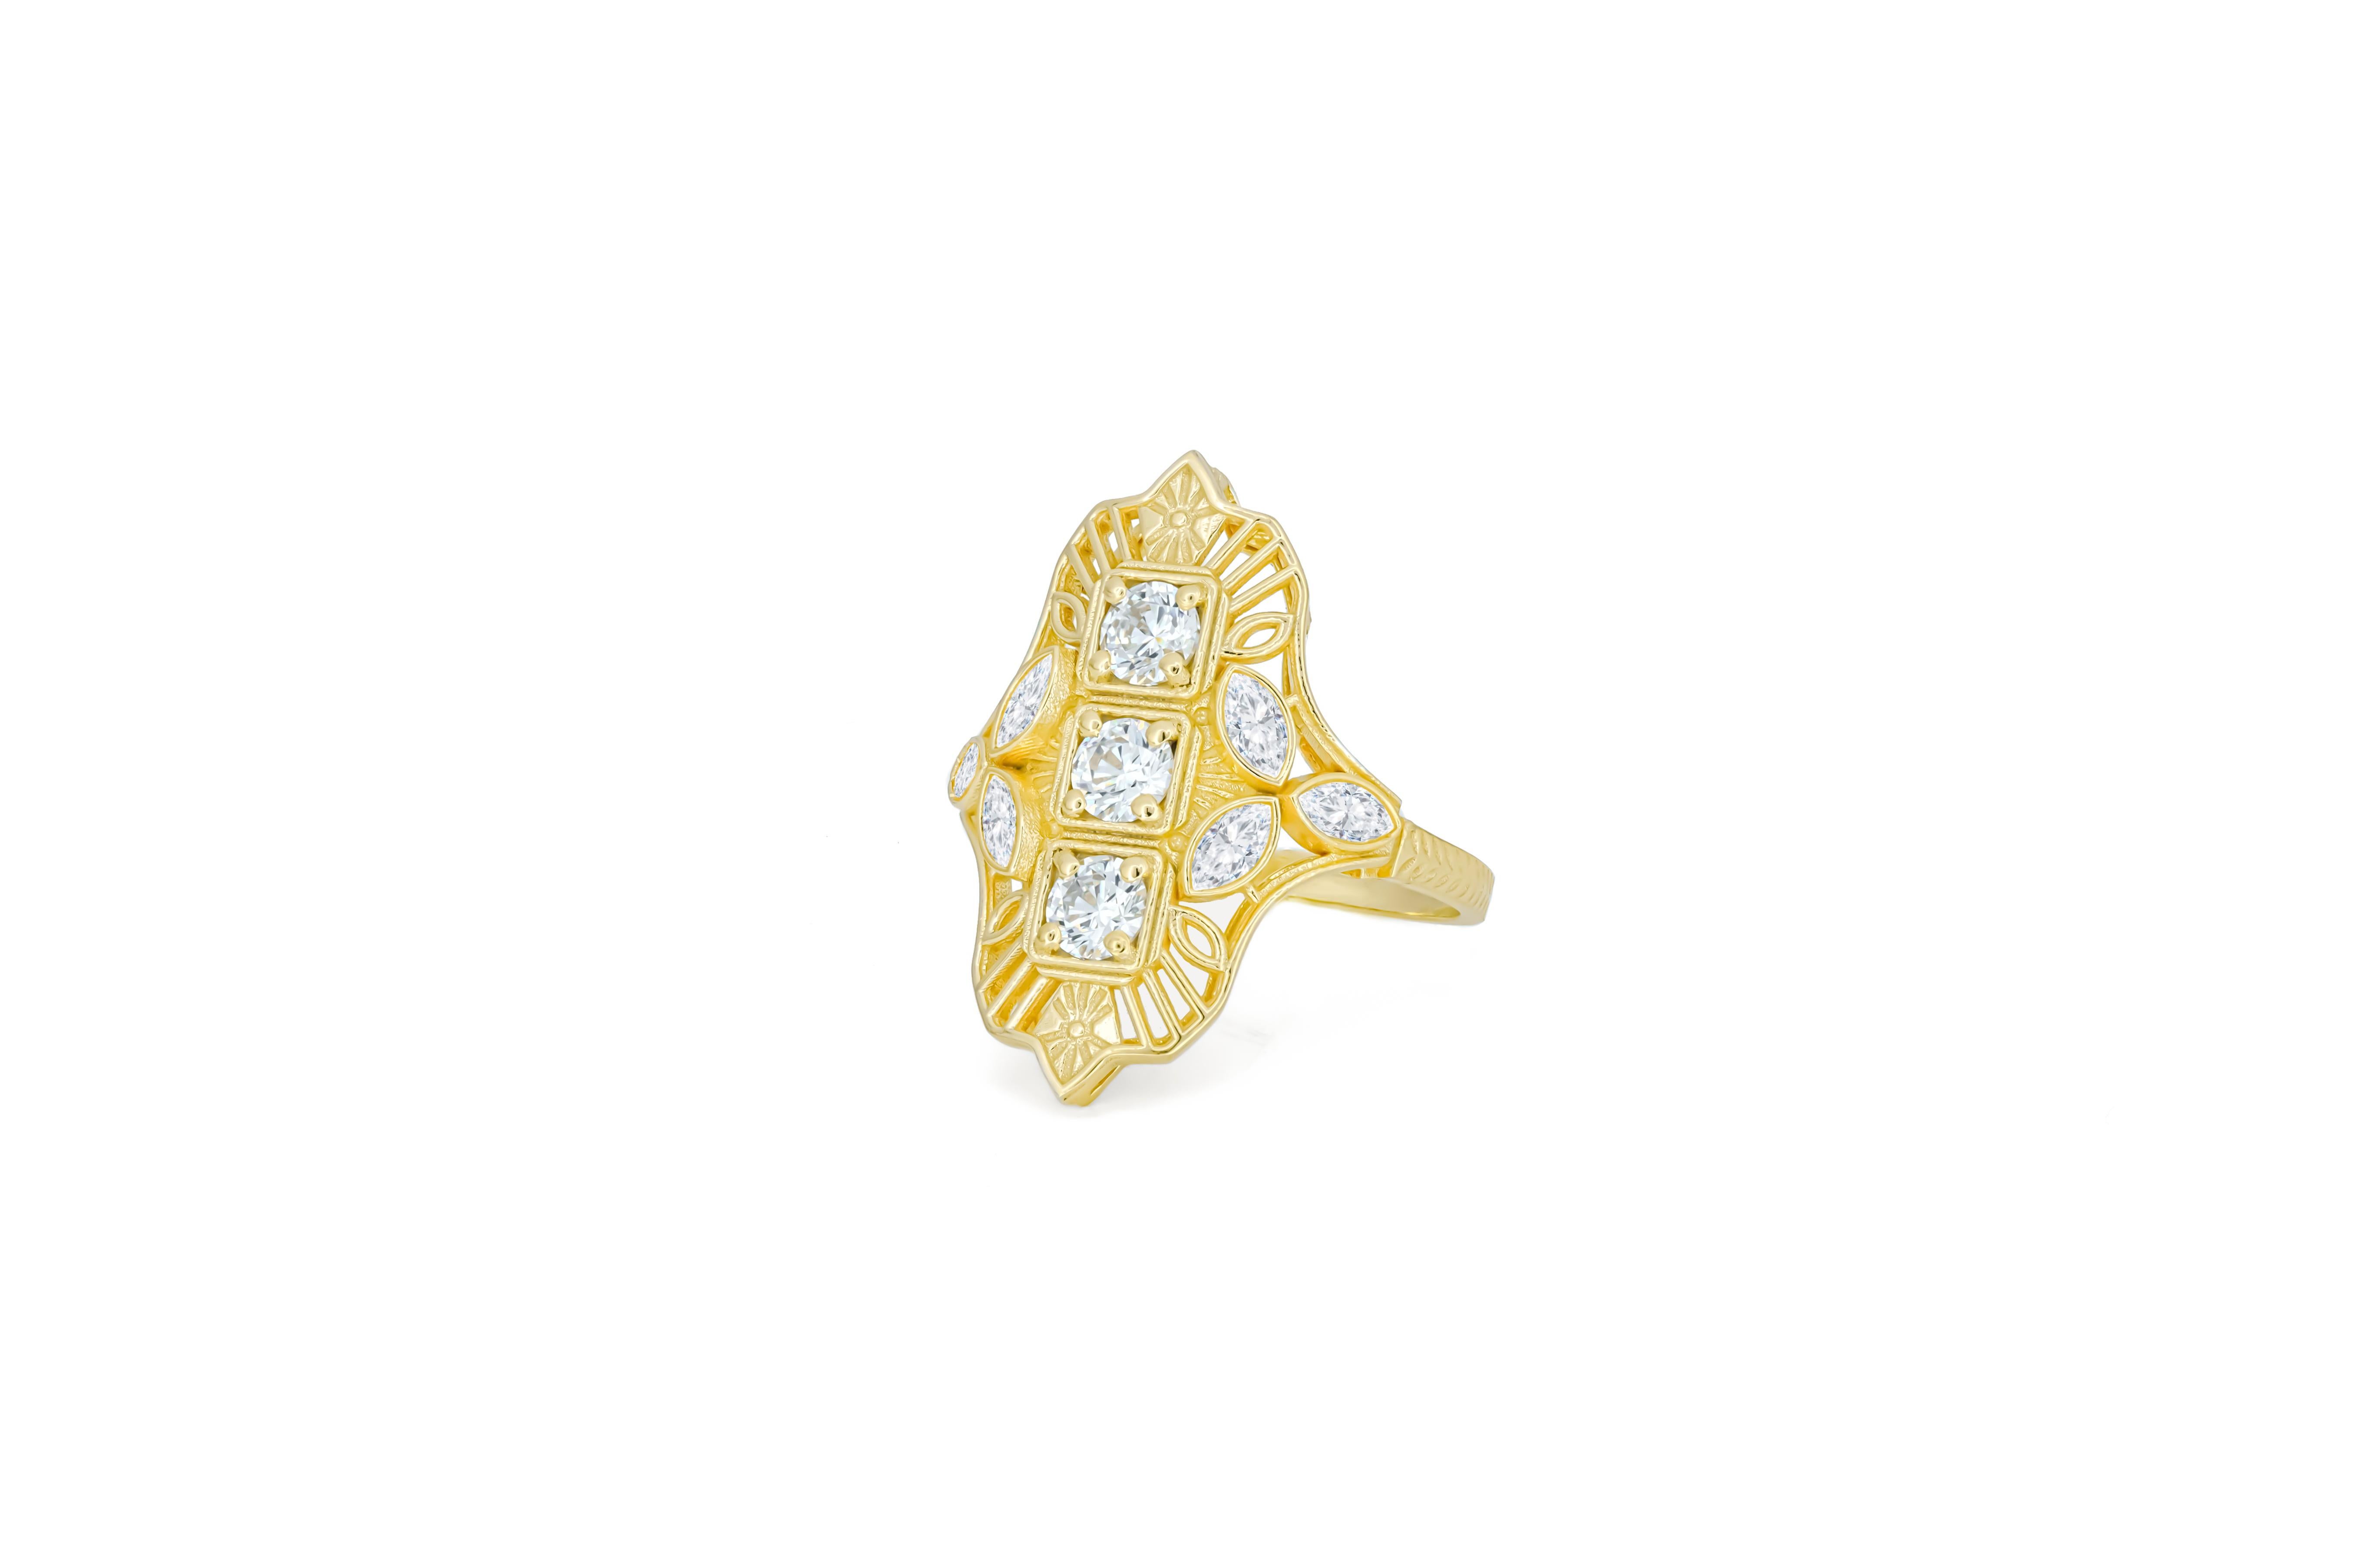 For Sale:  Vintage style moissanite 14k gold engagement ring. 4